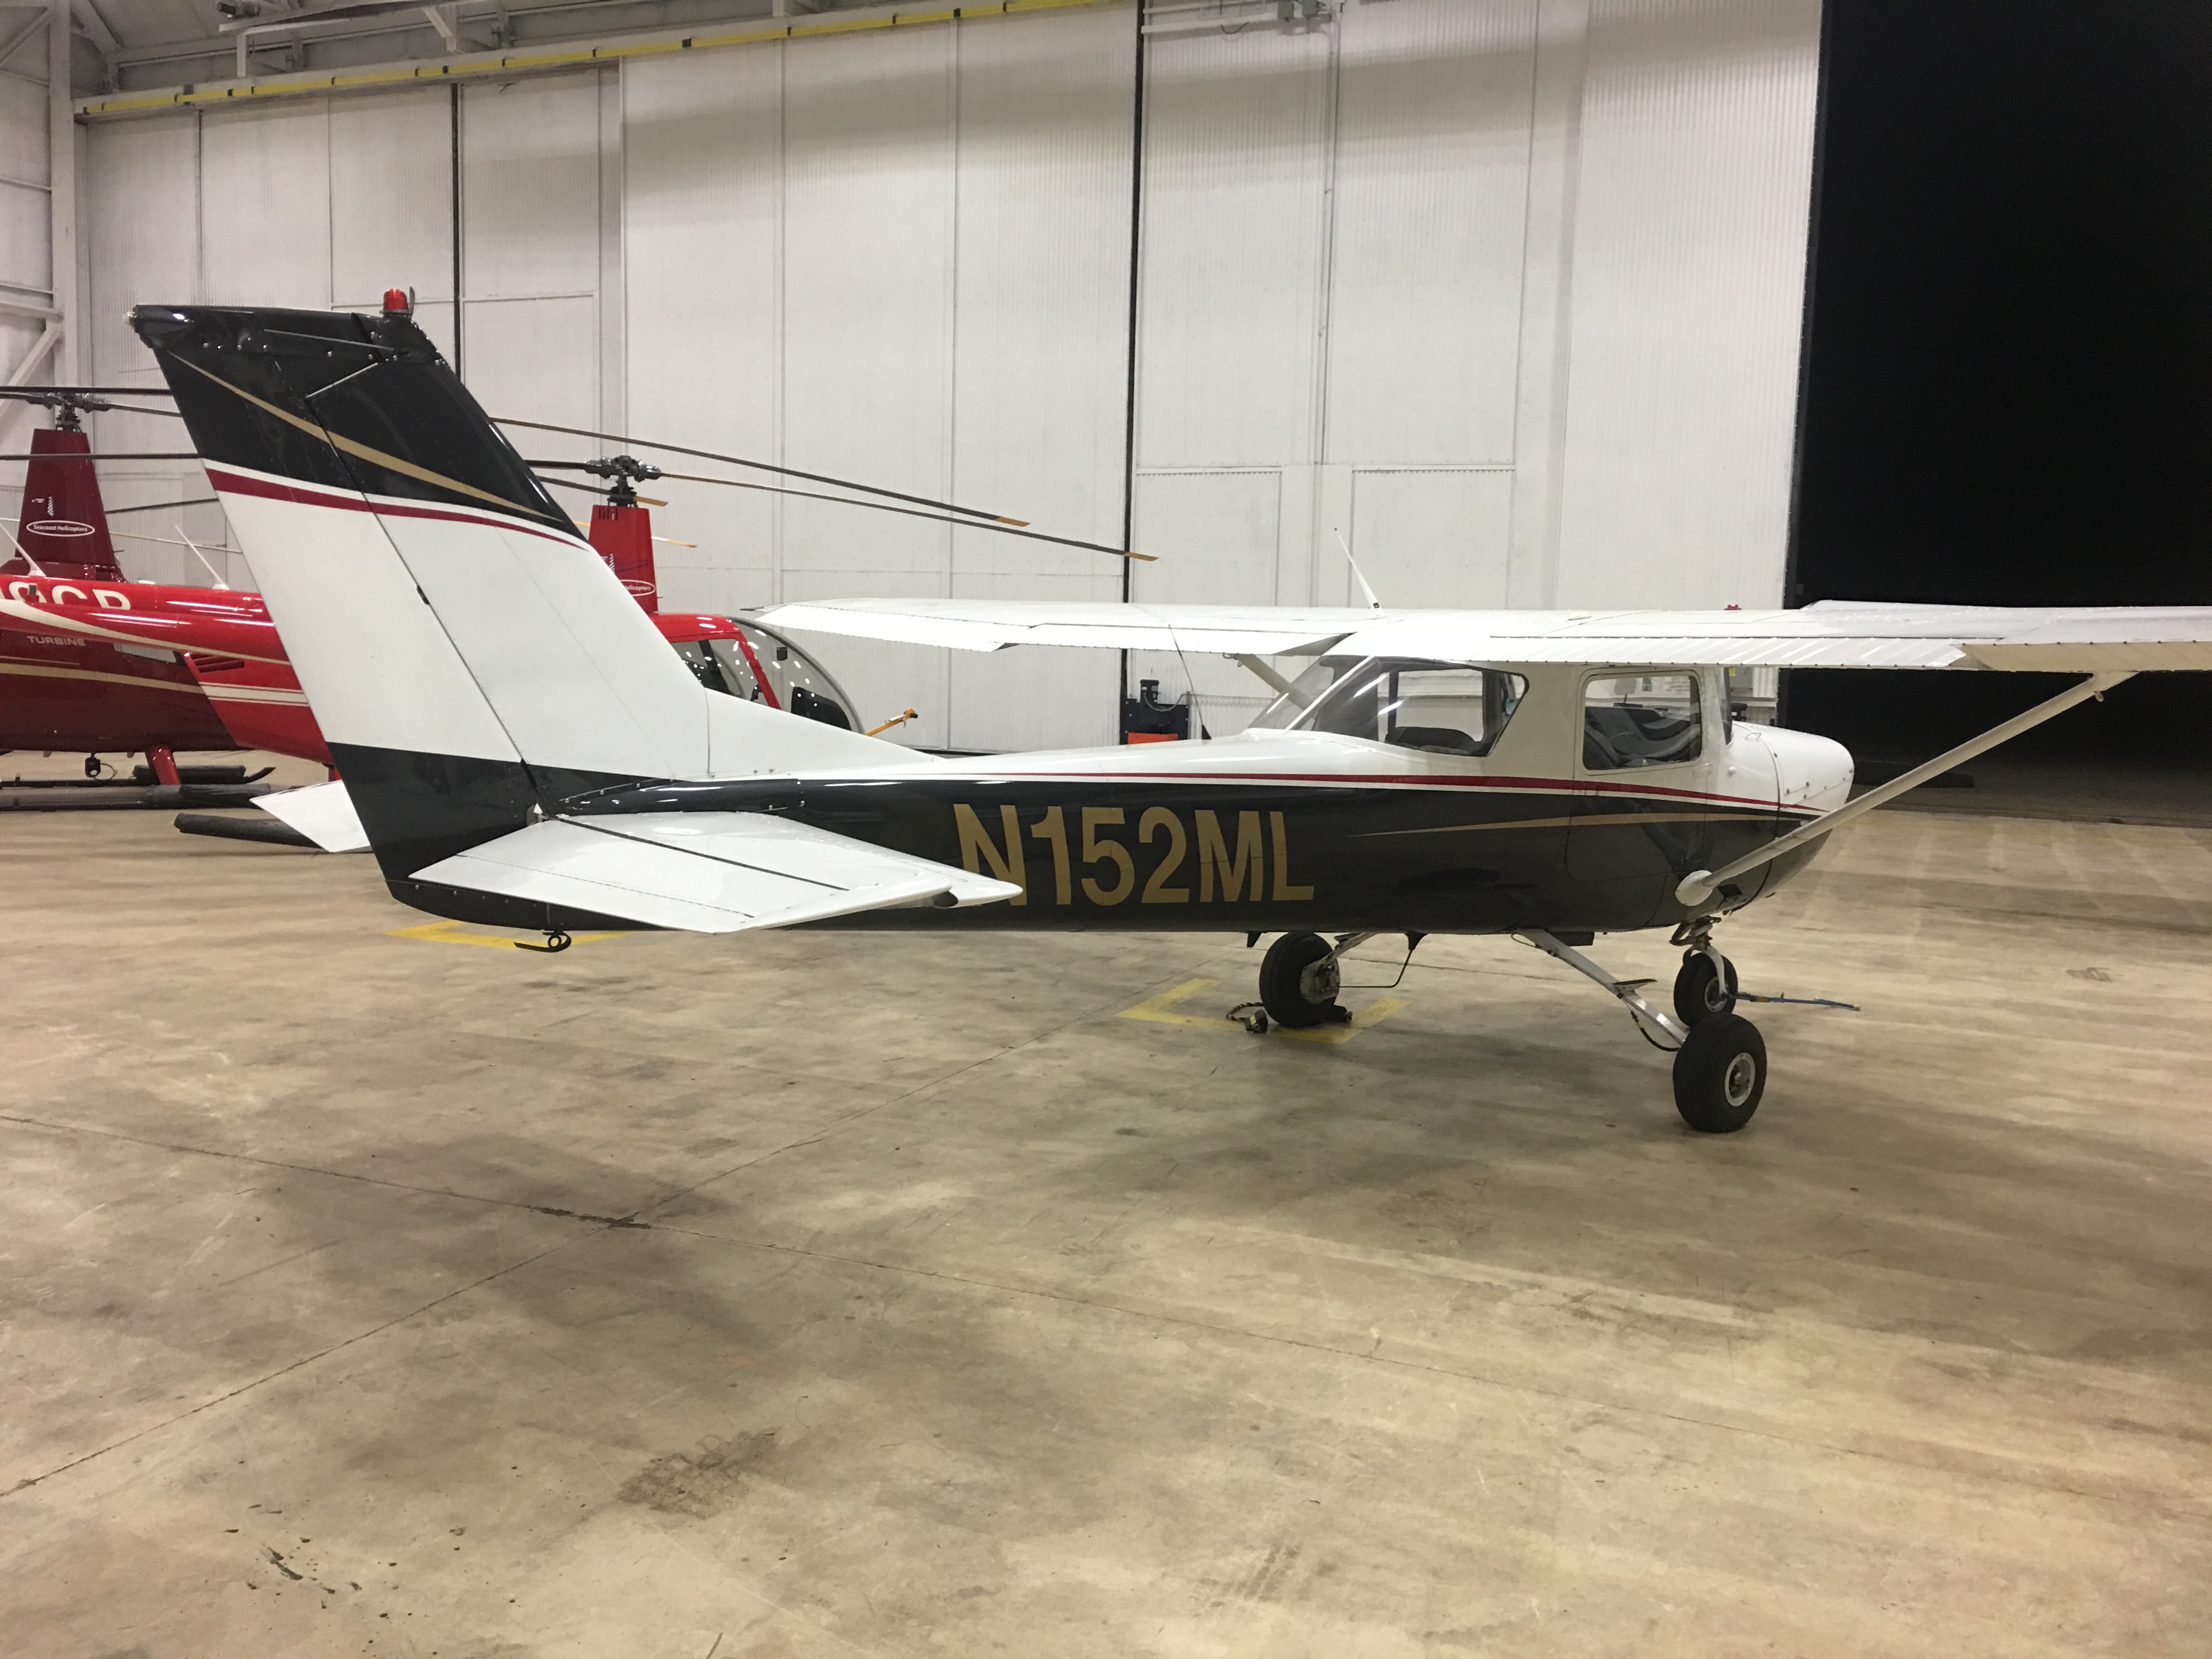 1969 Cessna 150J